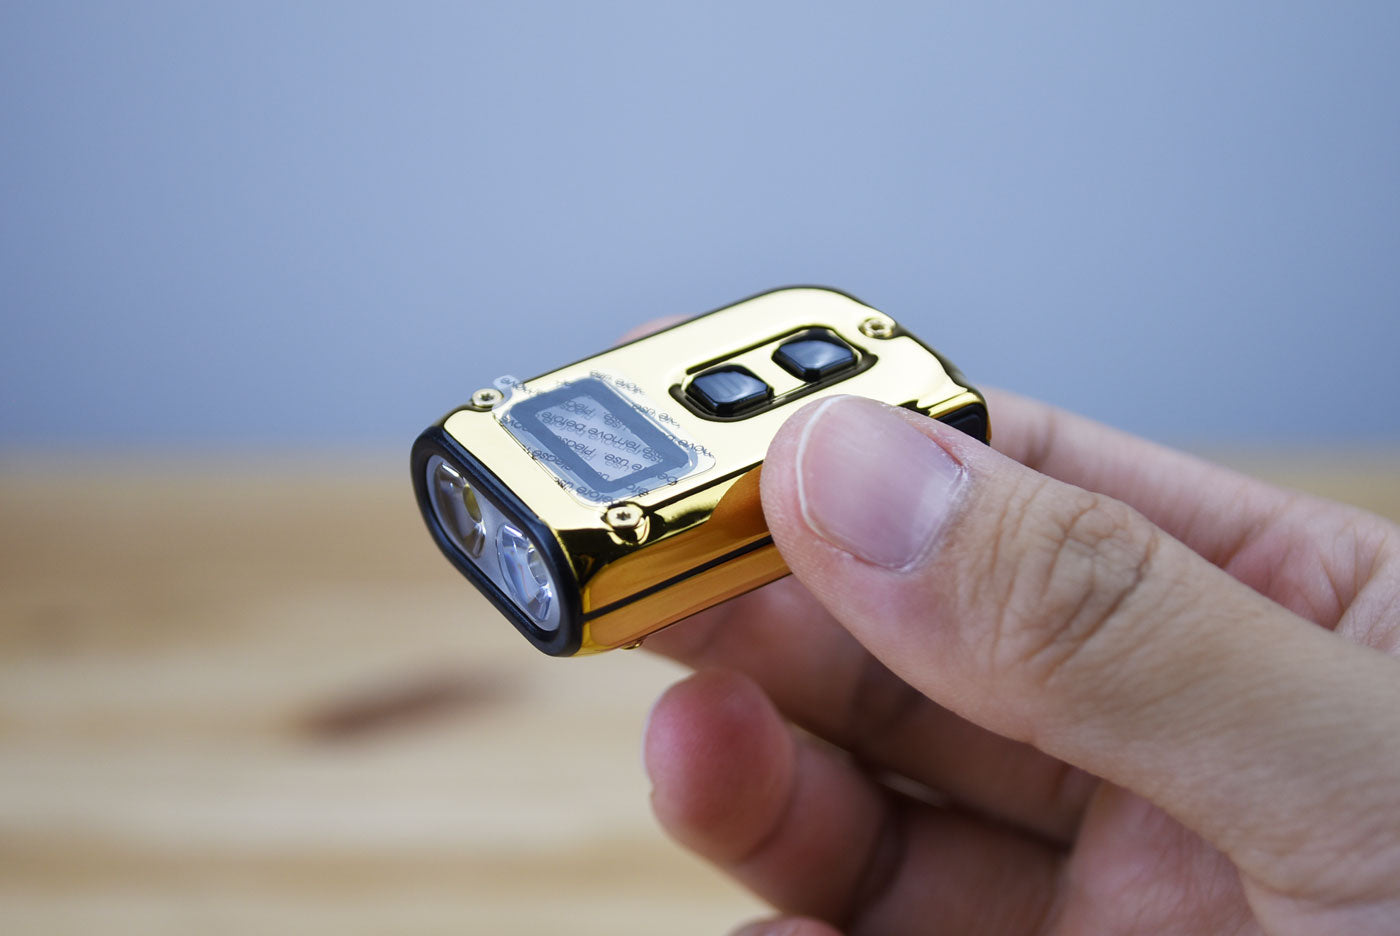 Nitecore TINI 2 SS Limited Edition Gold Keychain Rechargeable Flashlight (500 Lumens)